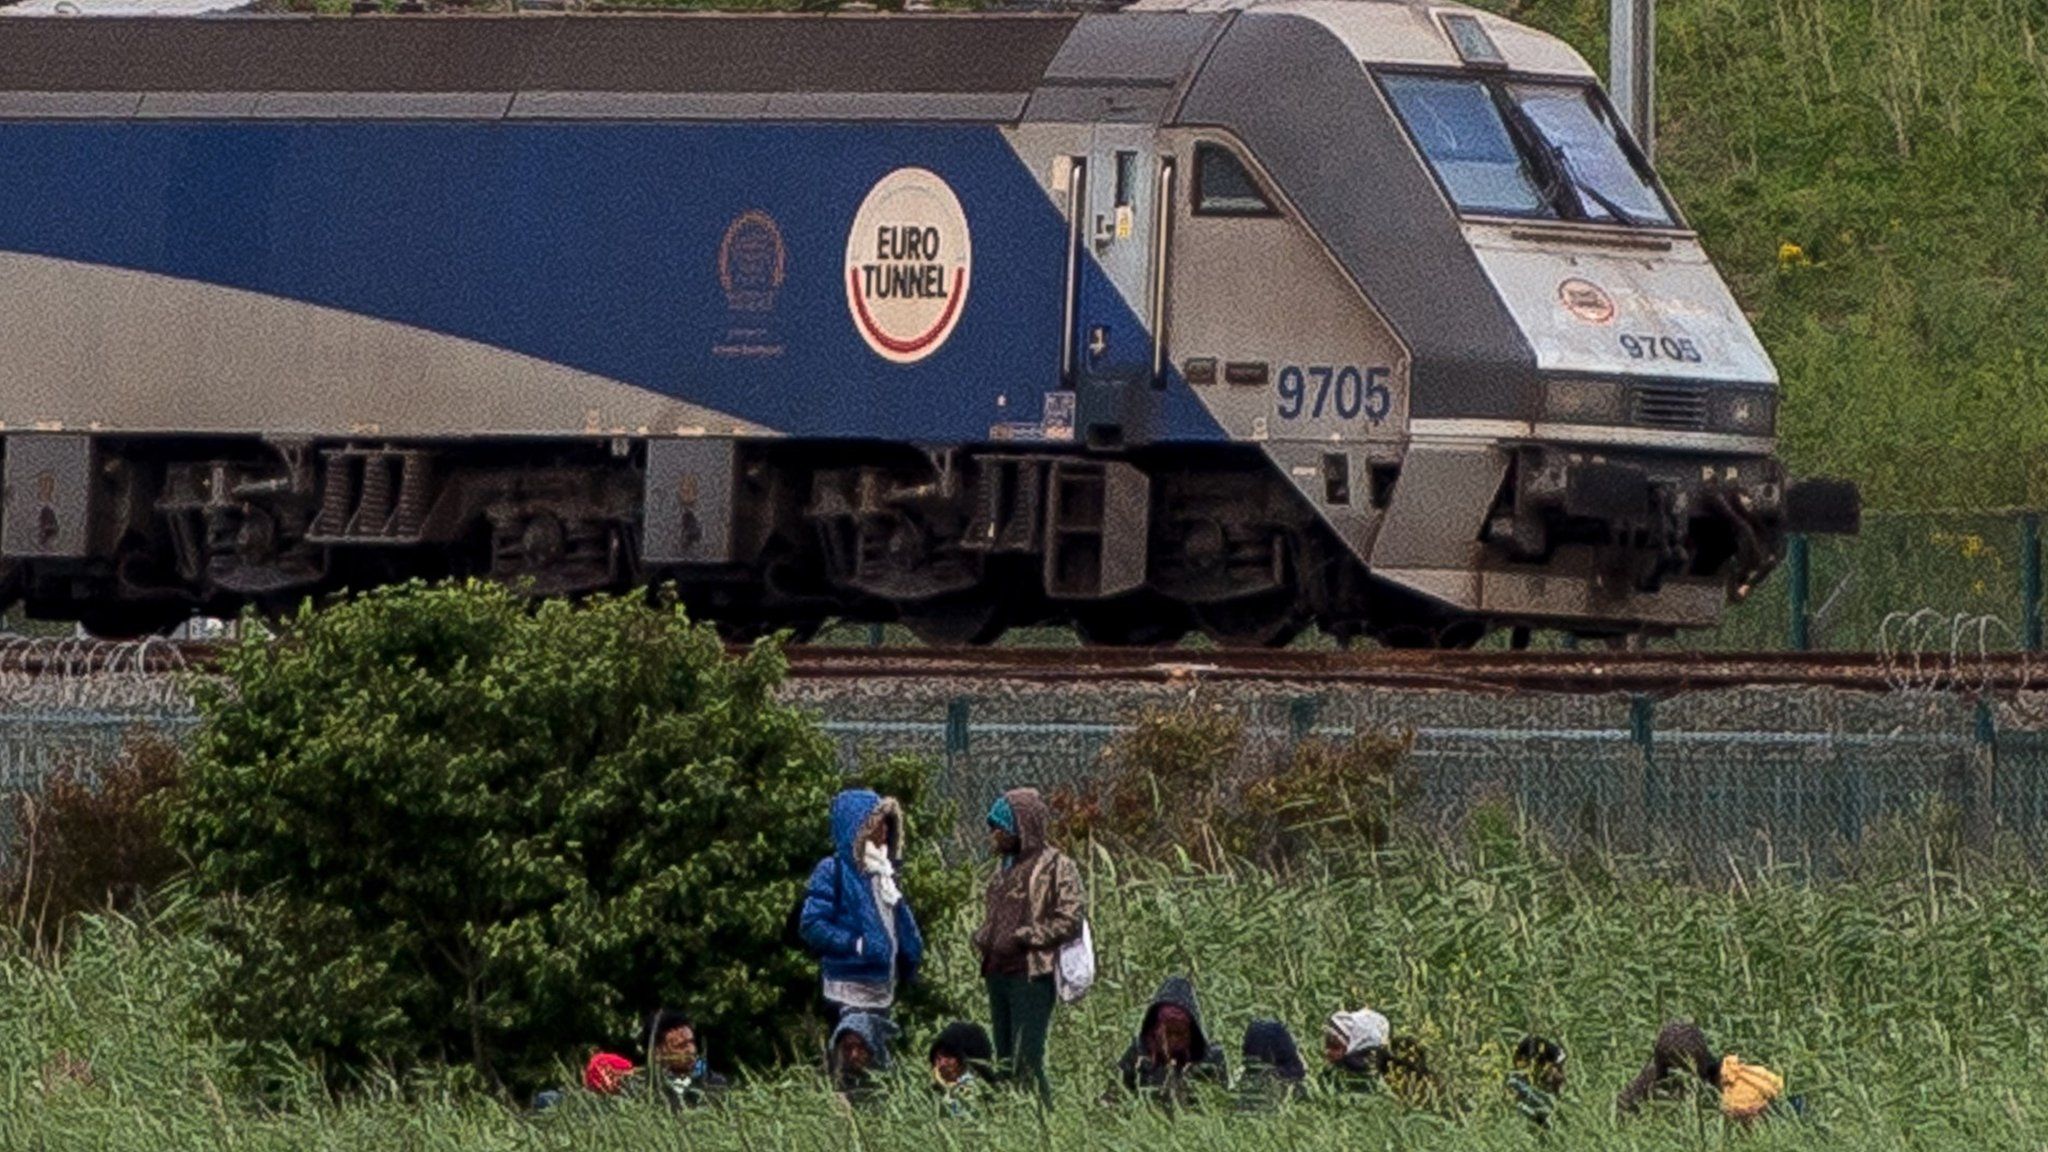 Migrants wait near Eurotunnel tracks in Calais on 29 July 2015